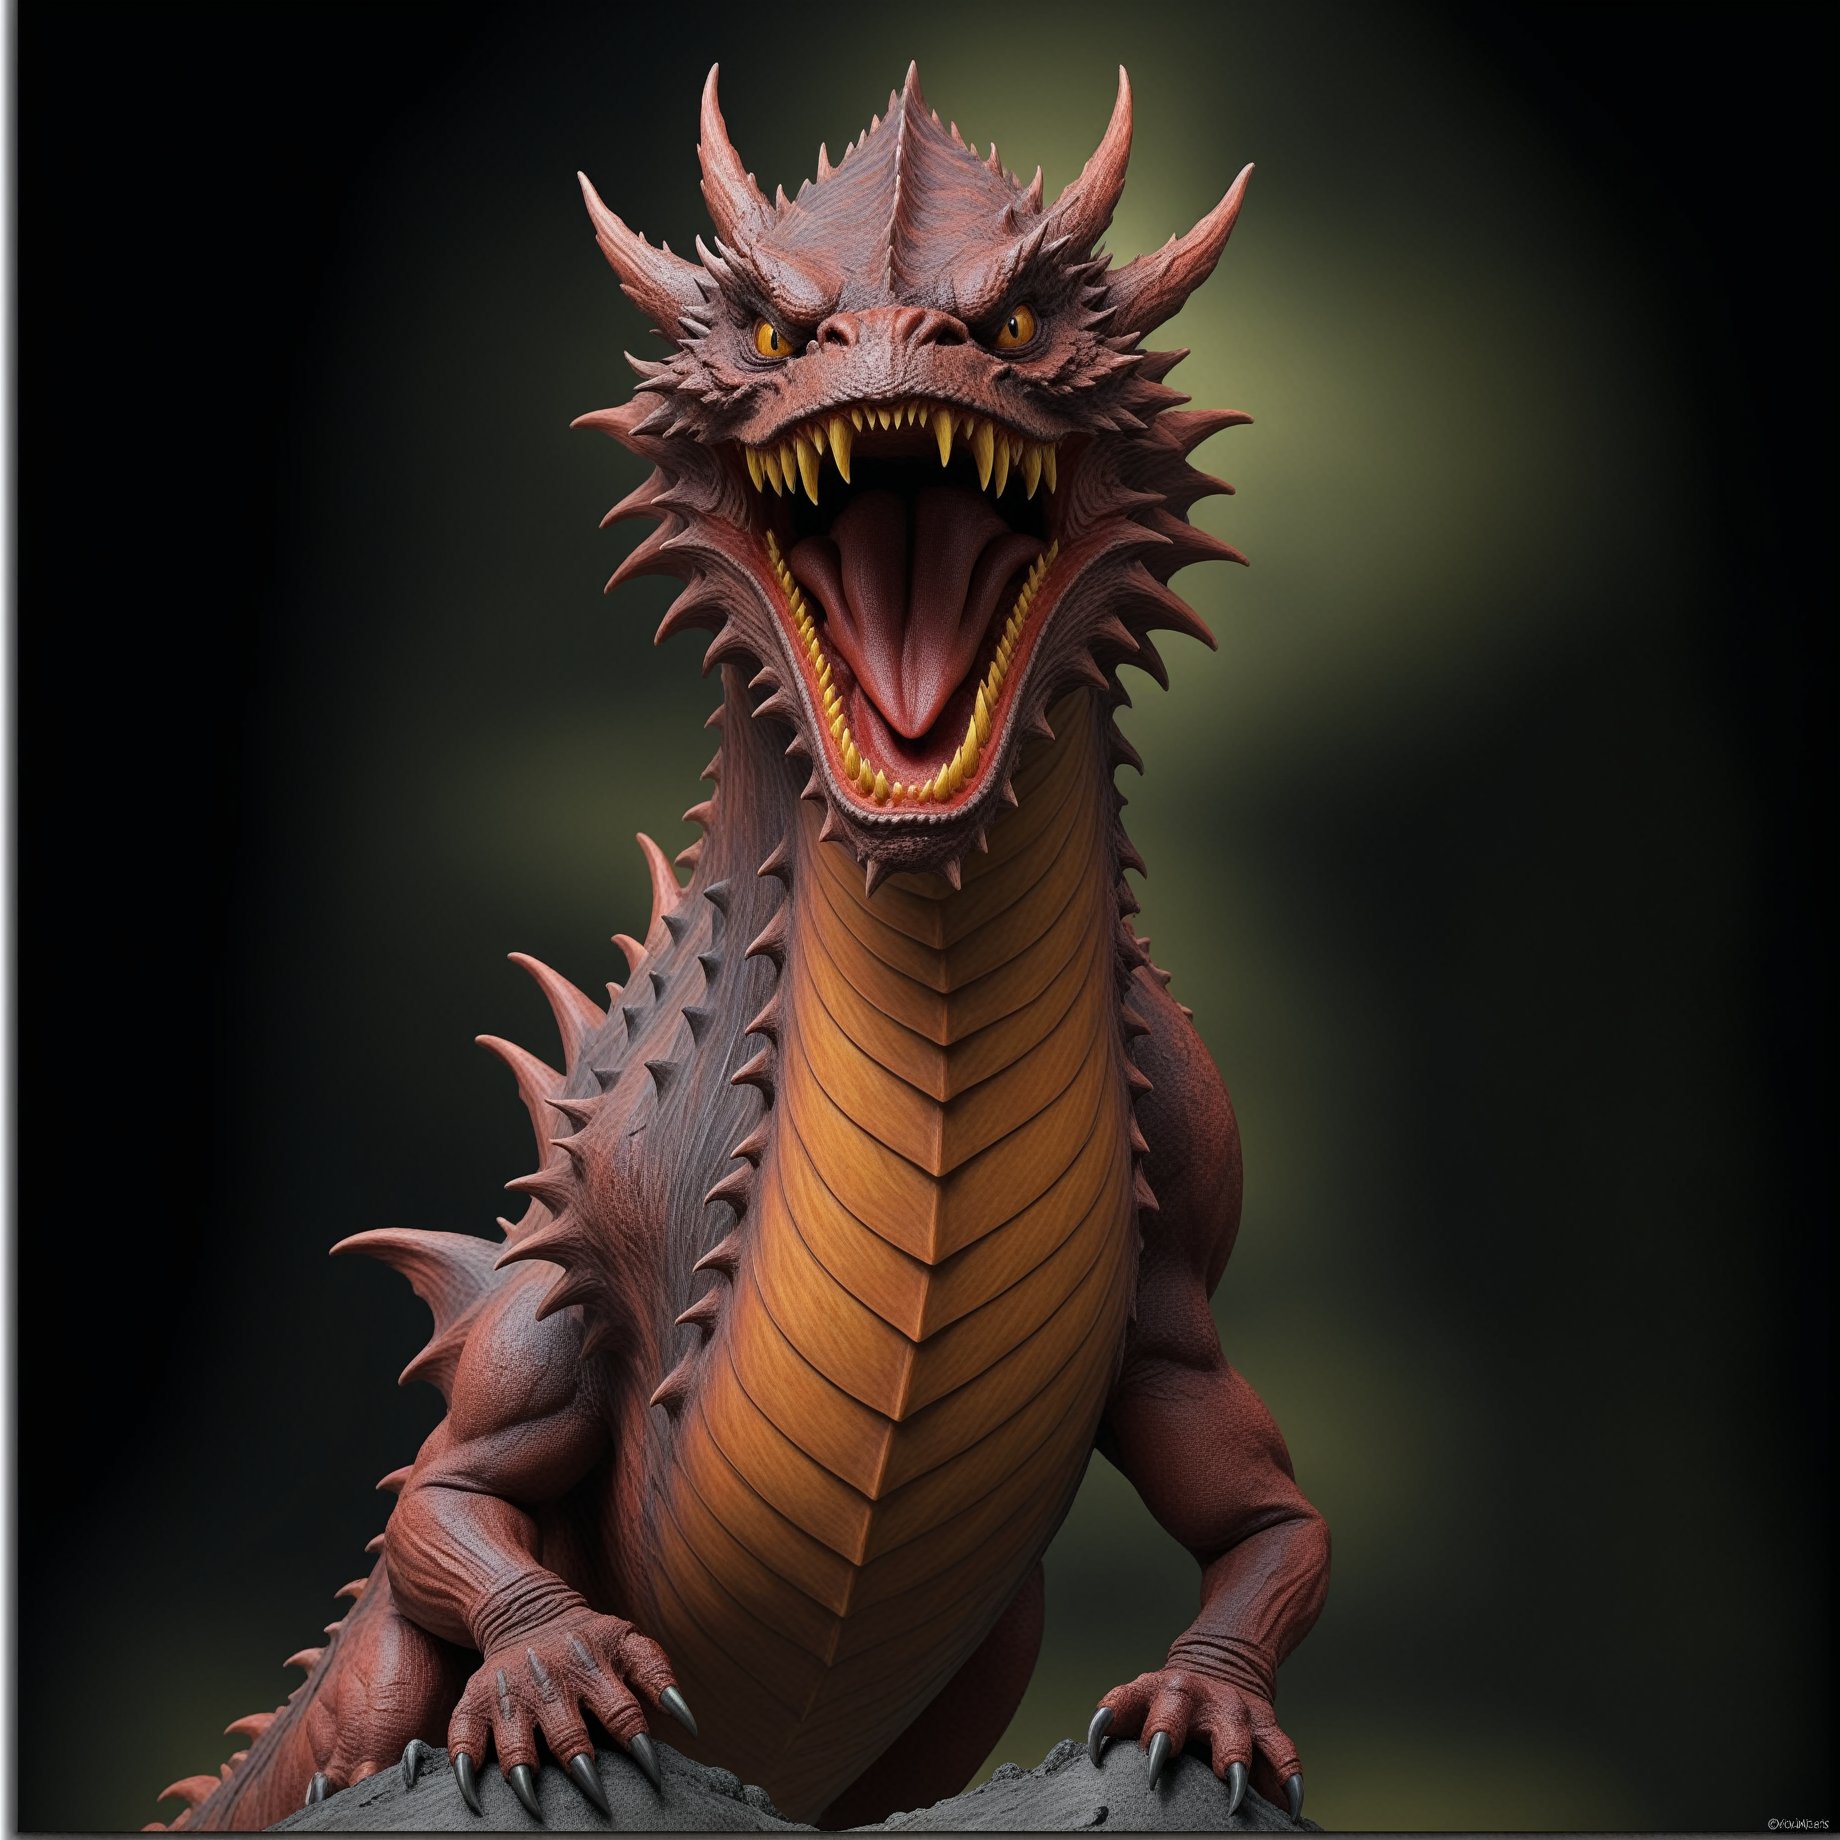 Angry fierce dragon,,darkart,,<lora:659095807385103906:1.0>